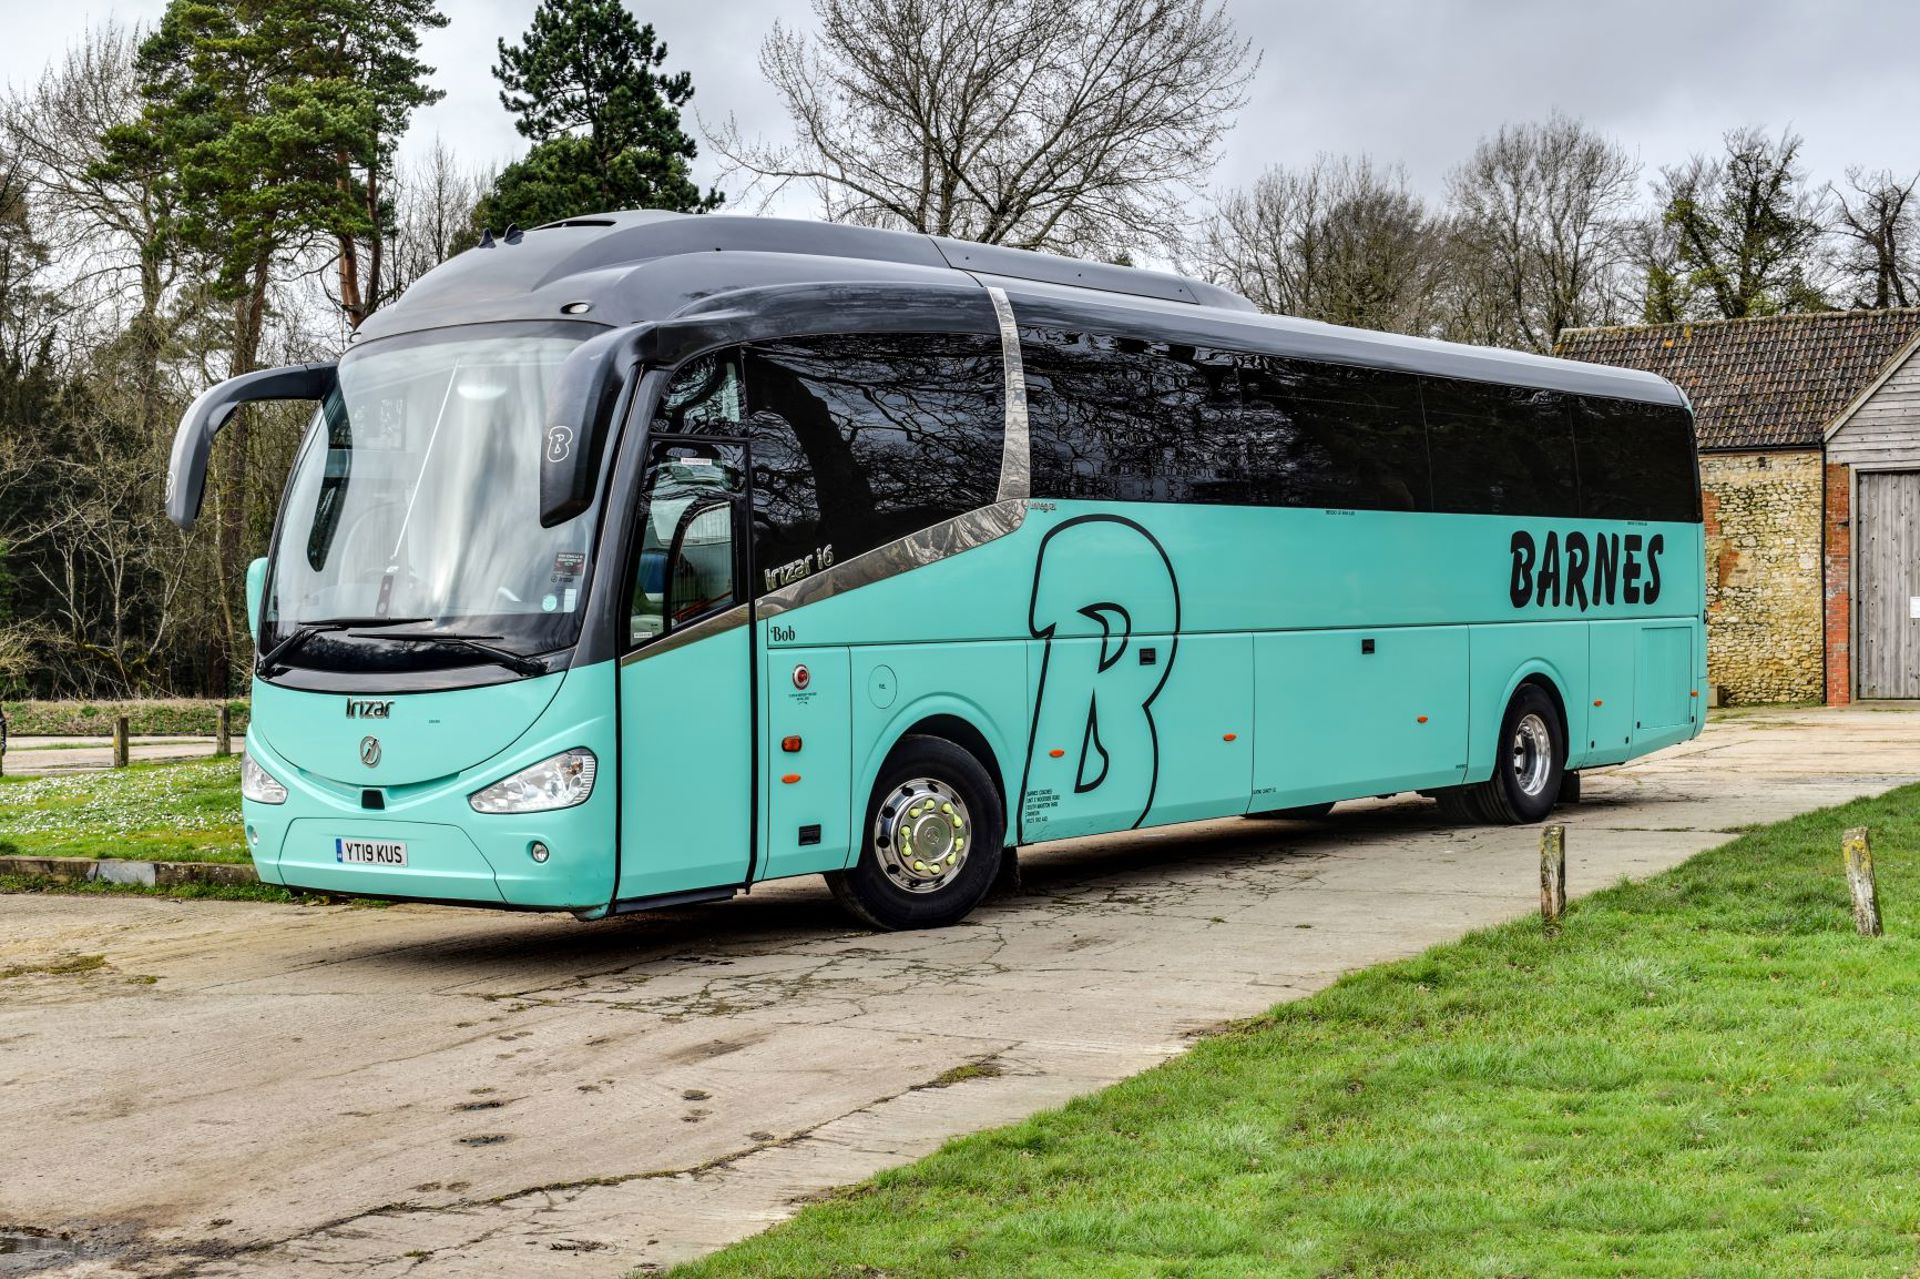 A Barnes Coaches bus